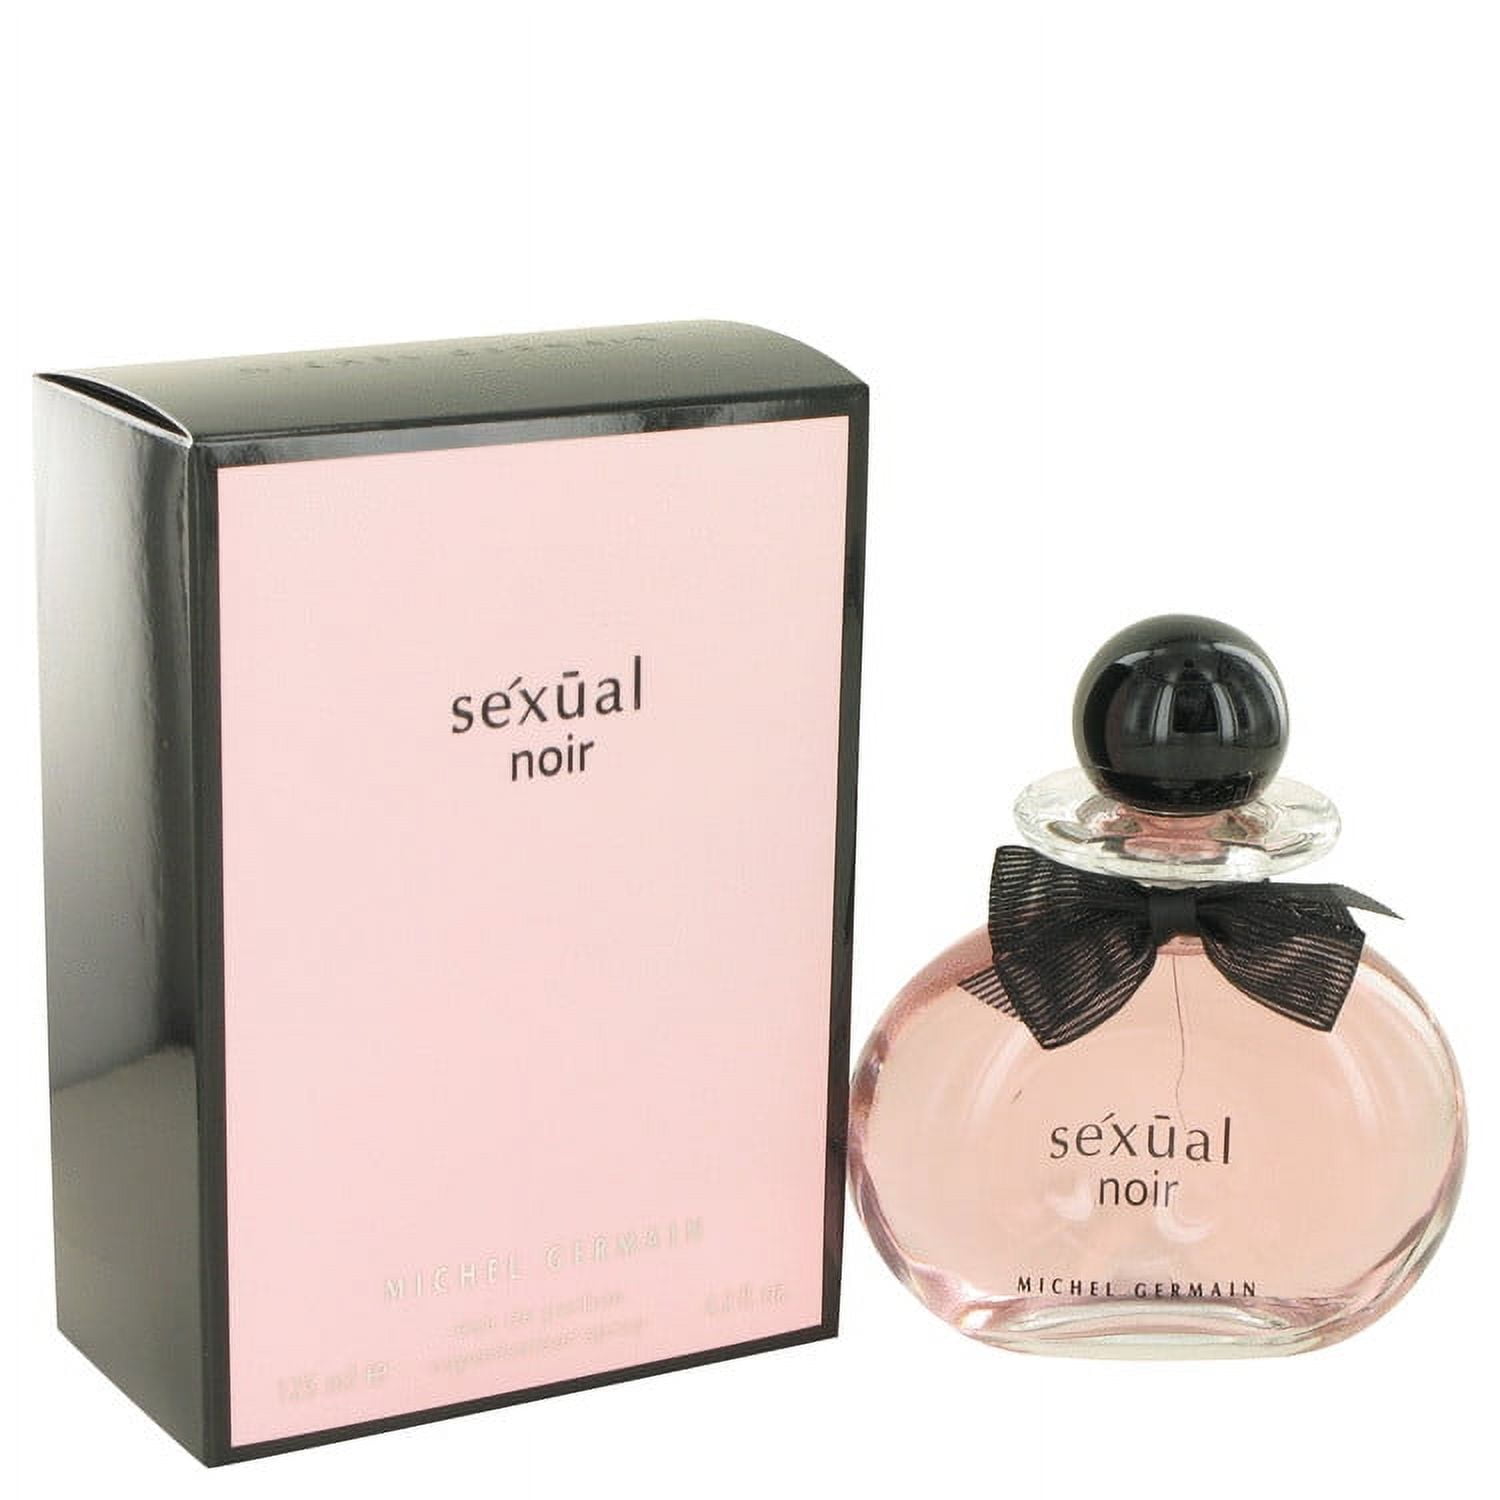 Chanel COCO 1.7oz / 50ml EDP EAU DE PARFUM Spray Perfume - New Unsealed Box